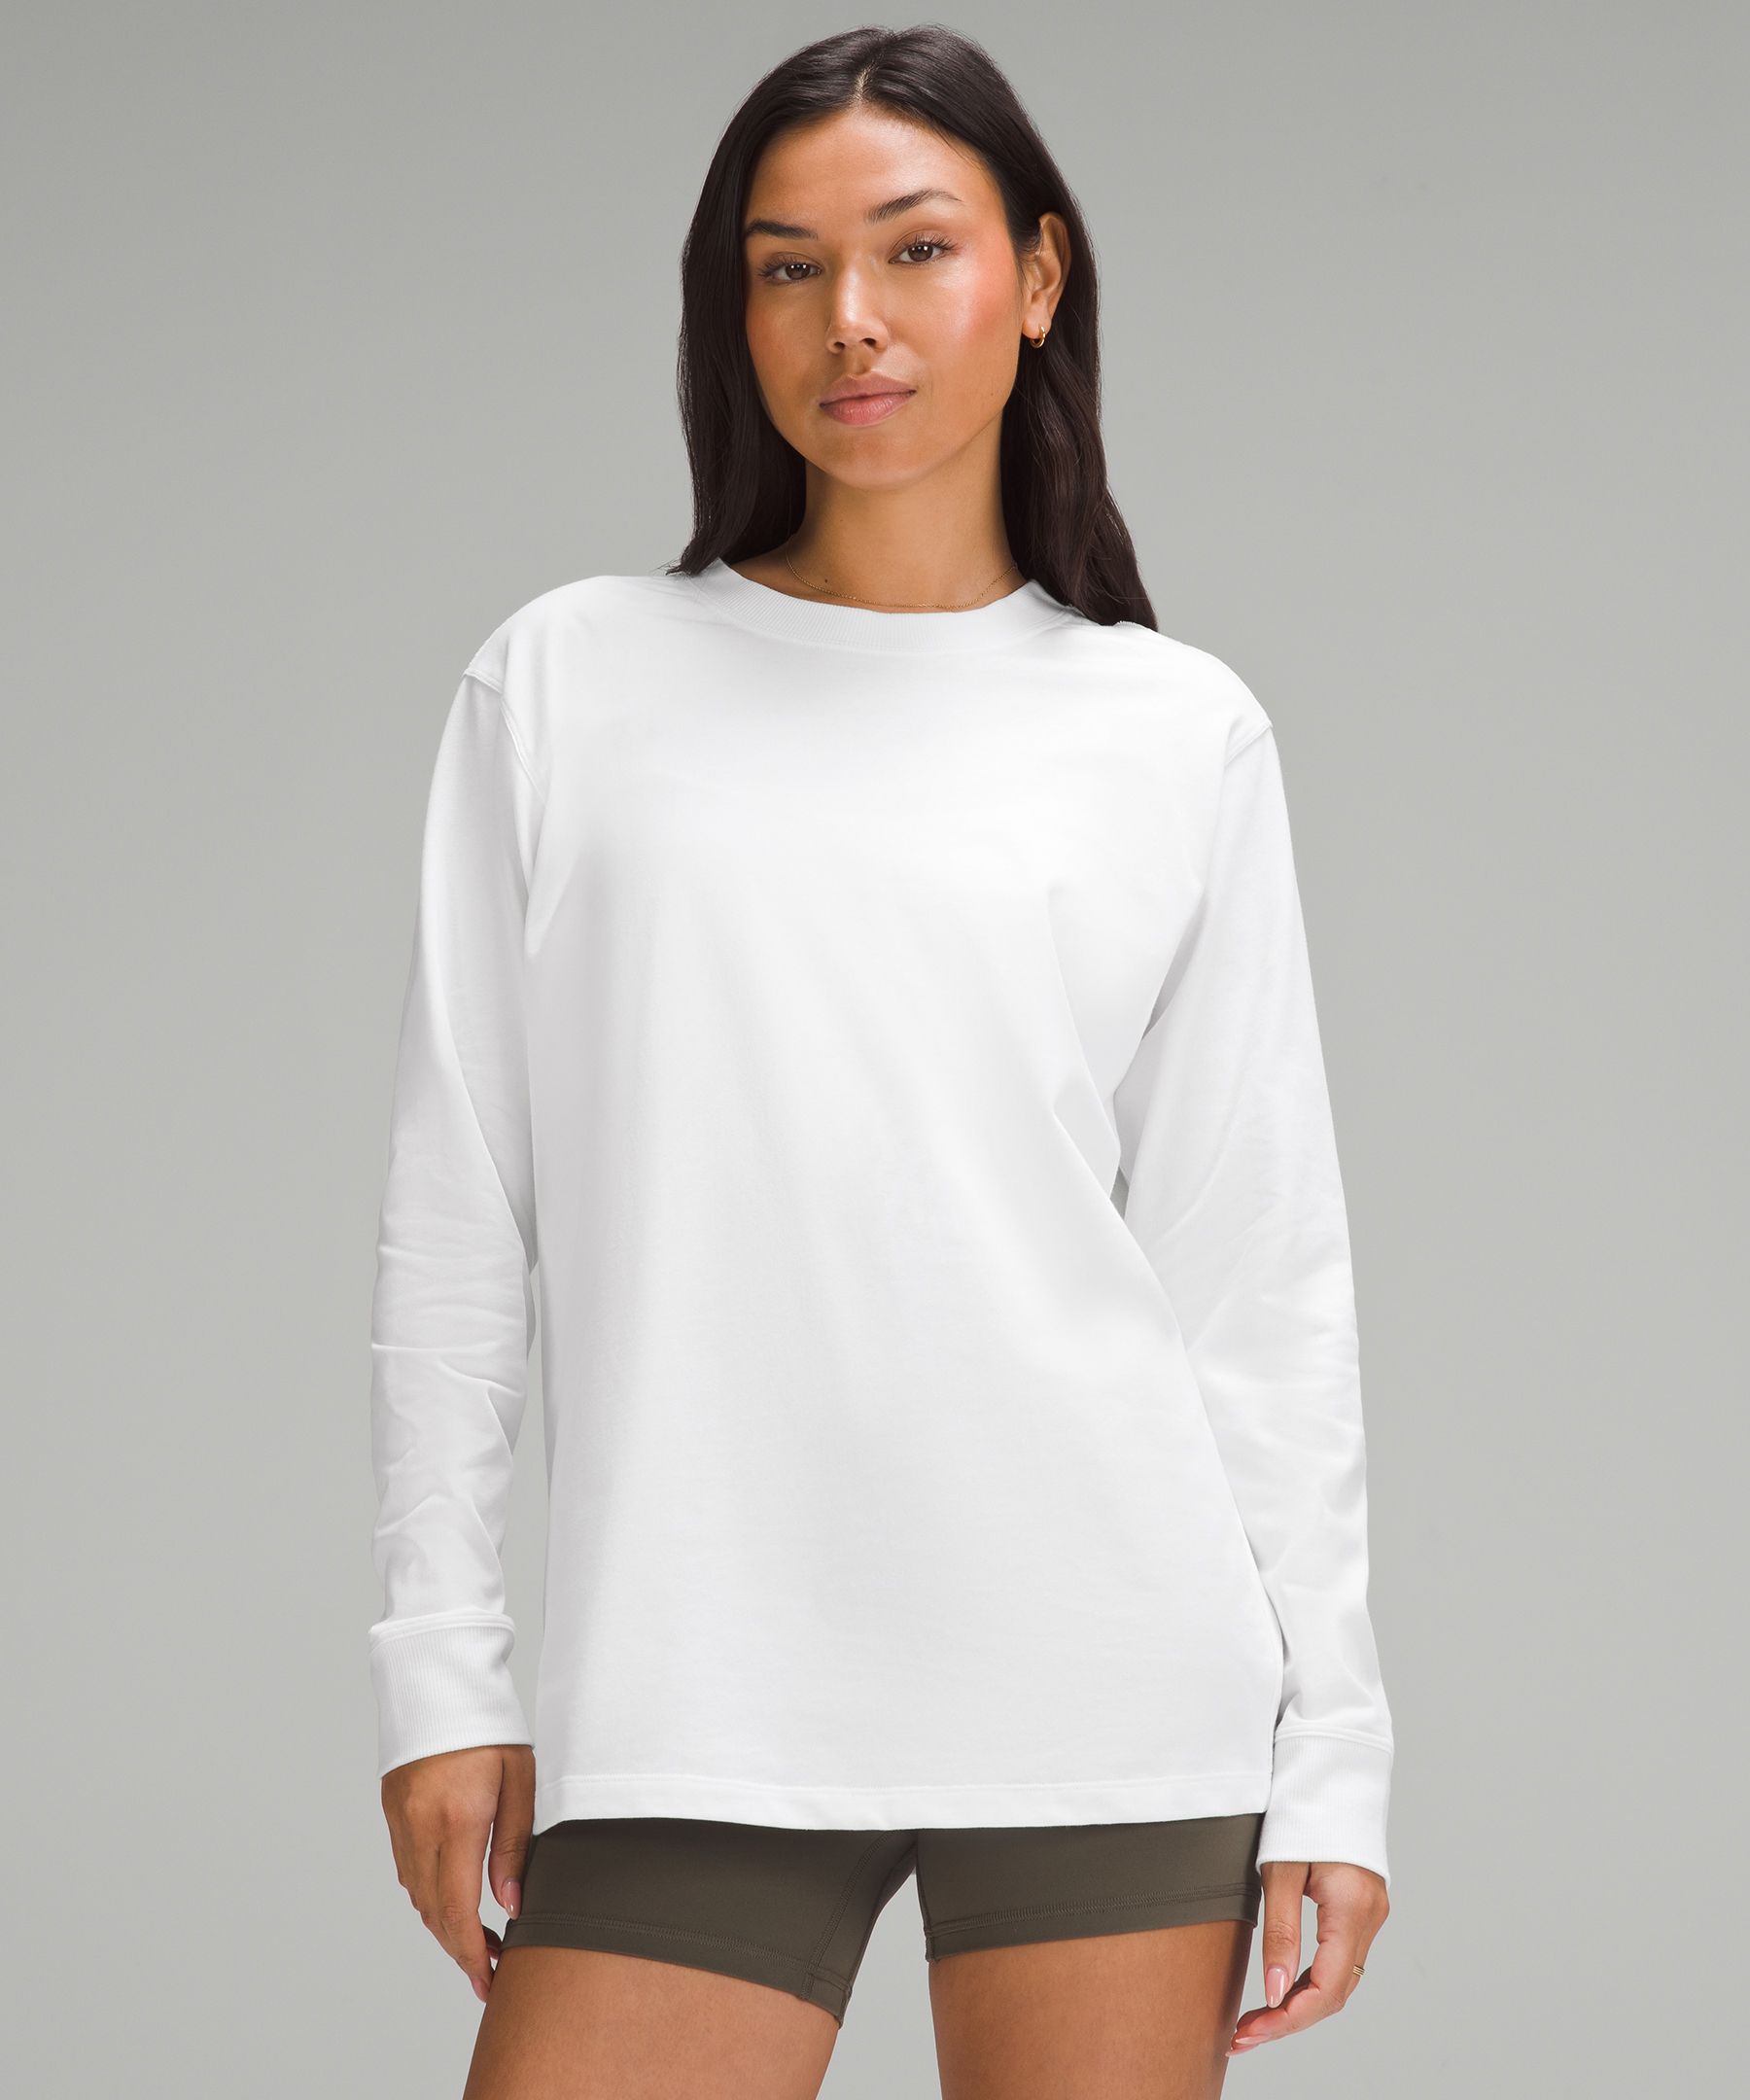 White OTS Top - Long Sleeve Top - OTS Long Sleeve Shirt - Lulus